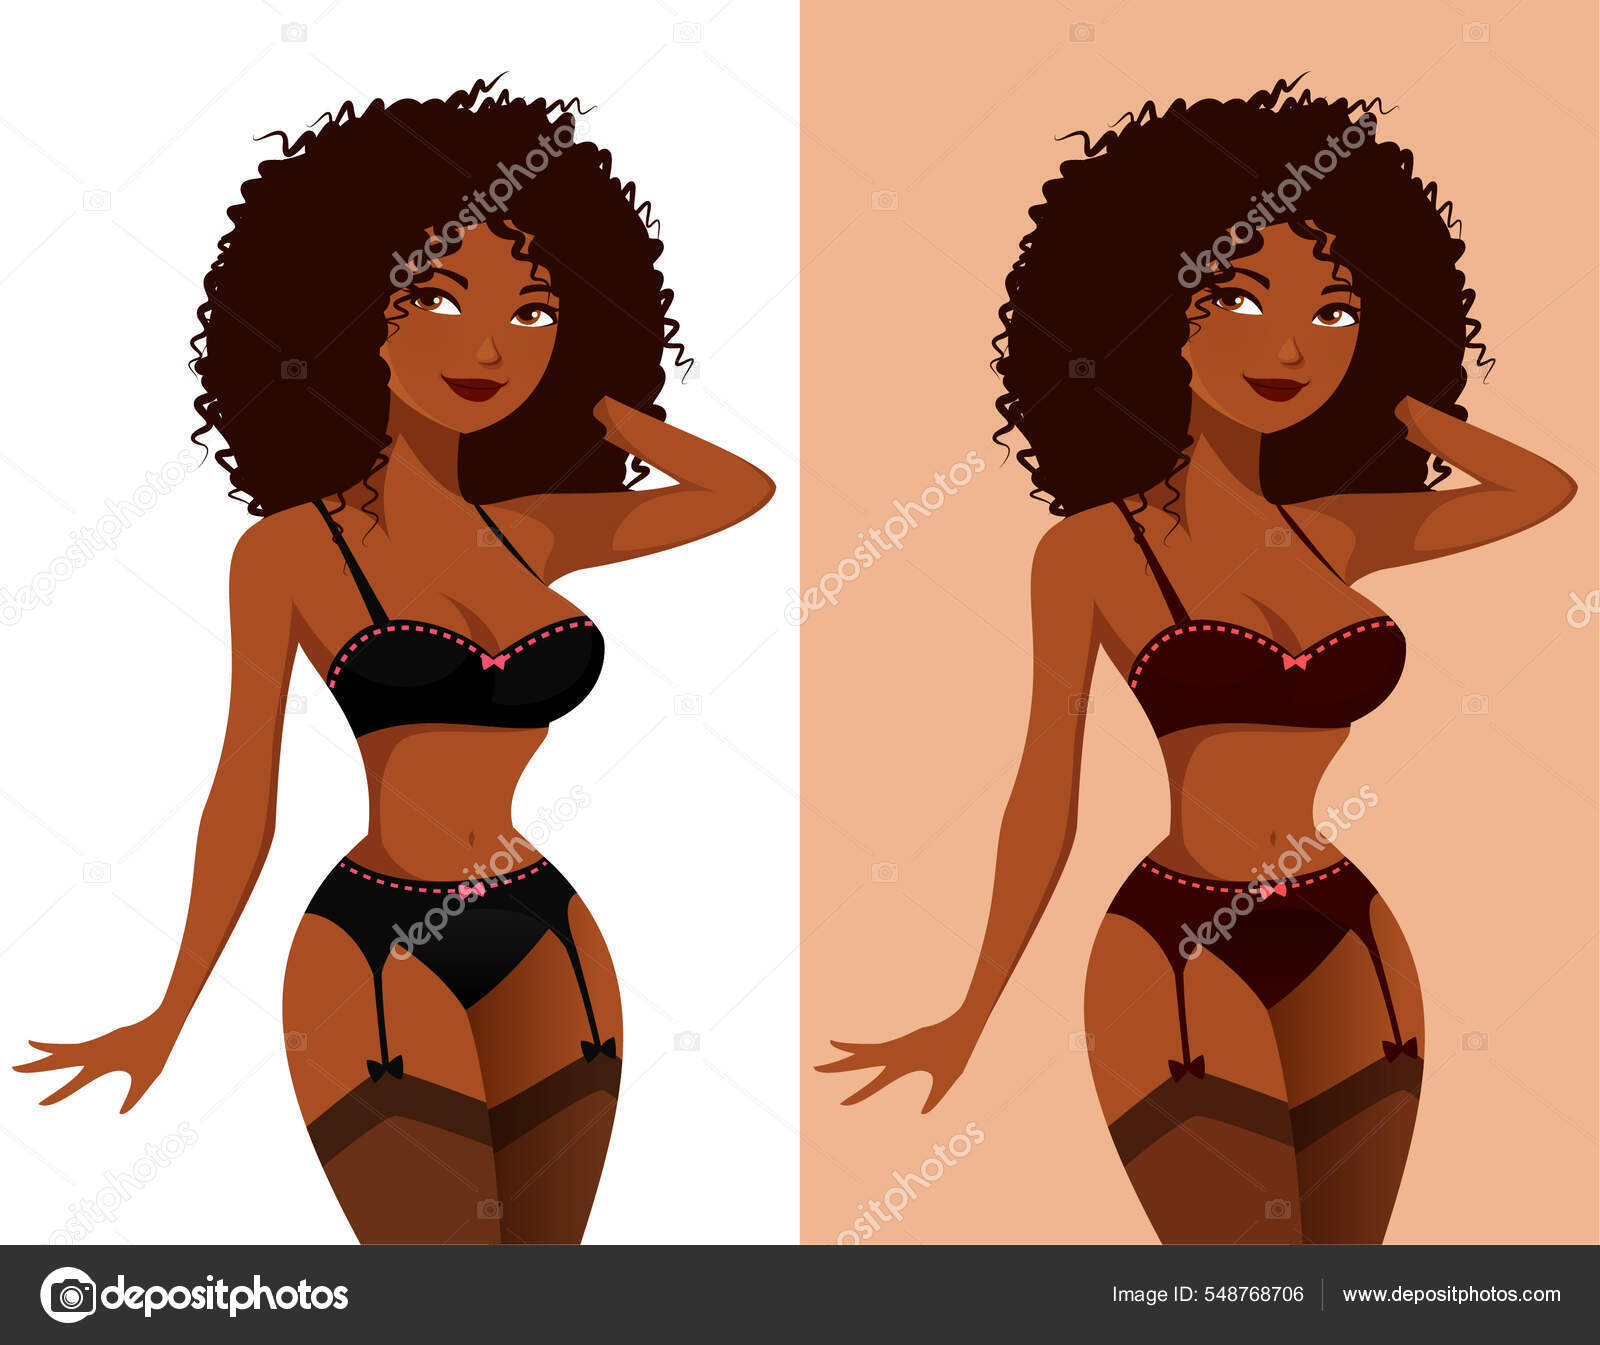 https://st.depositphotos.com/1611040/54876/v/1600/depositphotos_548768706-stock-illustration-sexy-african-american-girl-lingerie.jpg